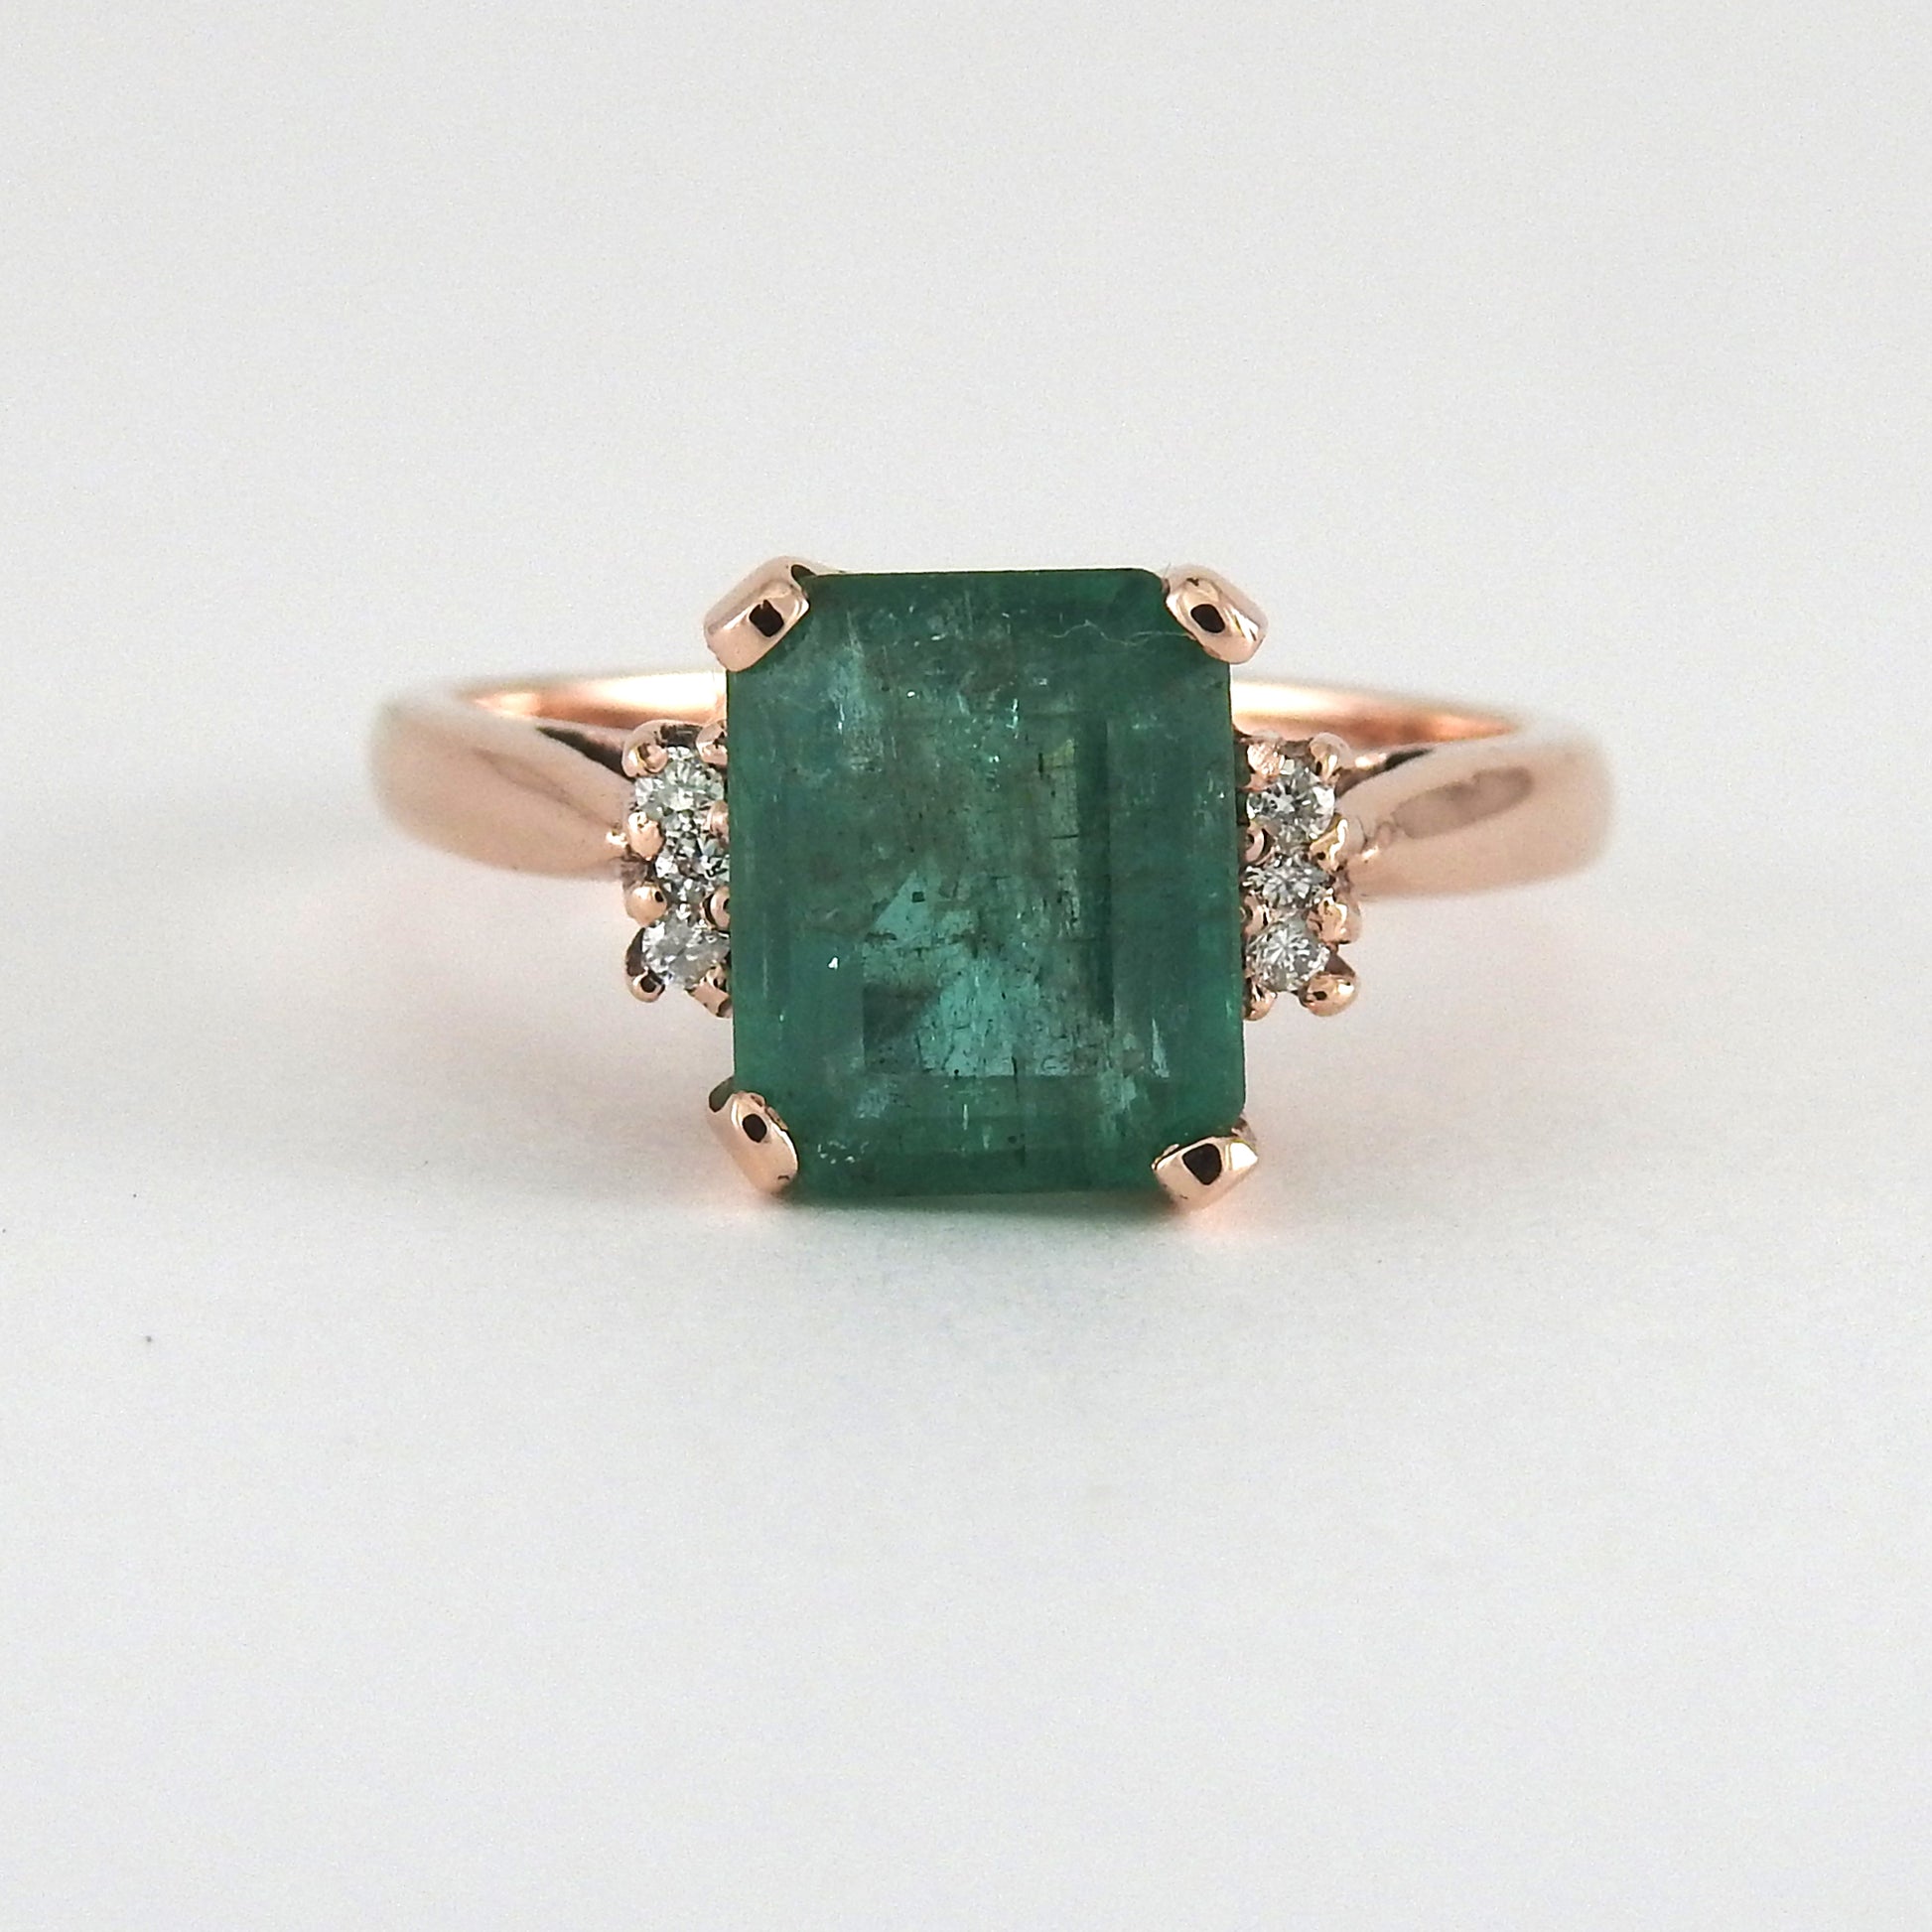 Emerald and diamonds